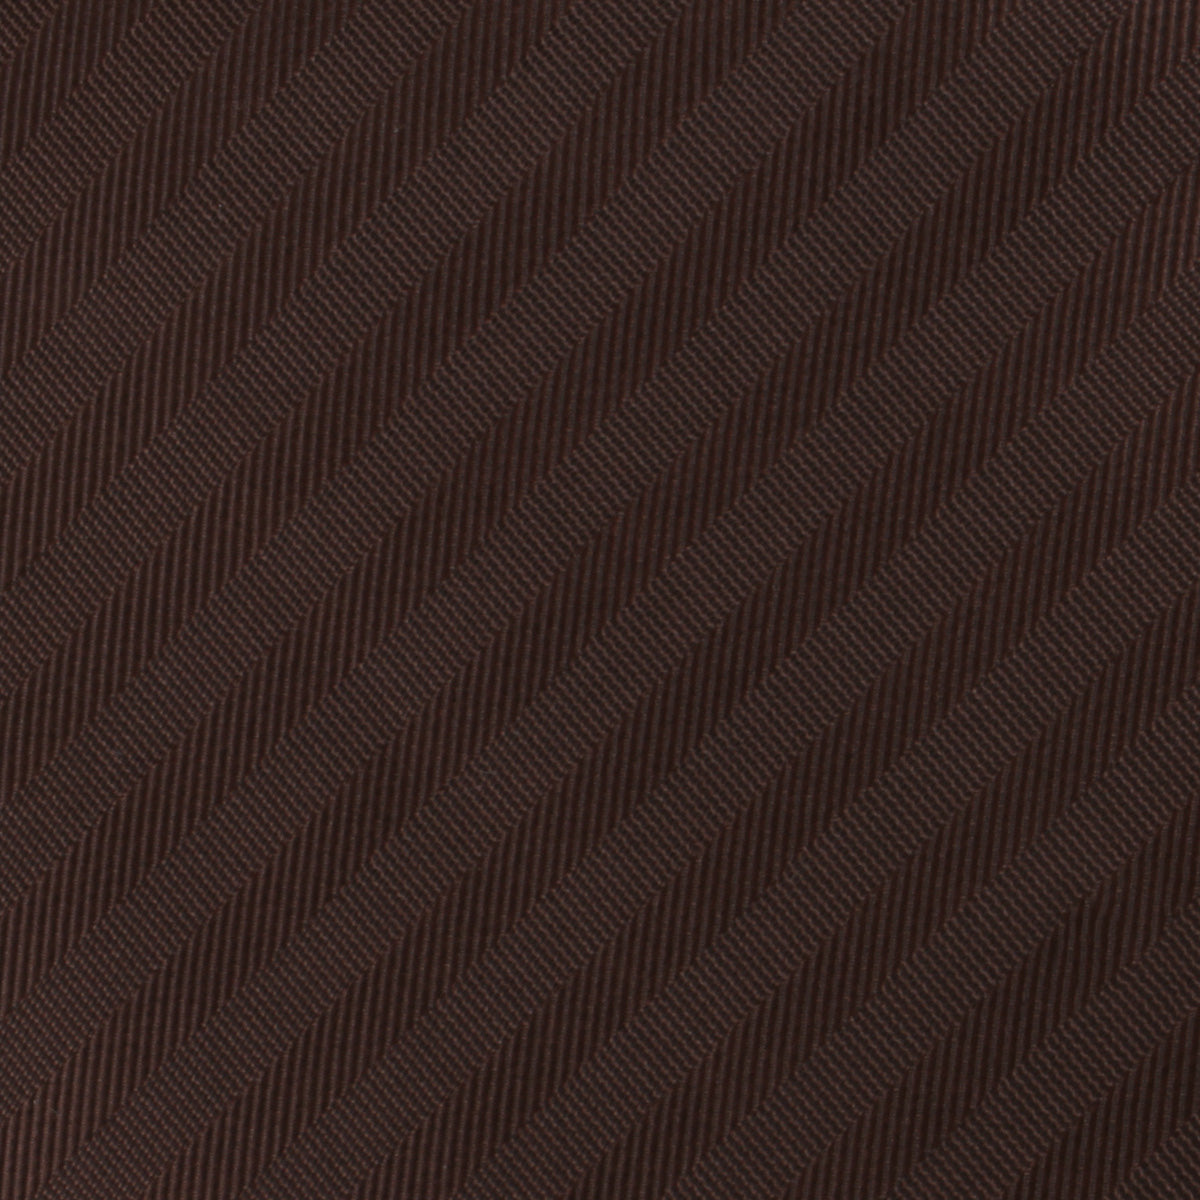 Cinnamon Brown Striped Fabric Swatch